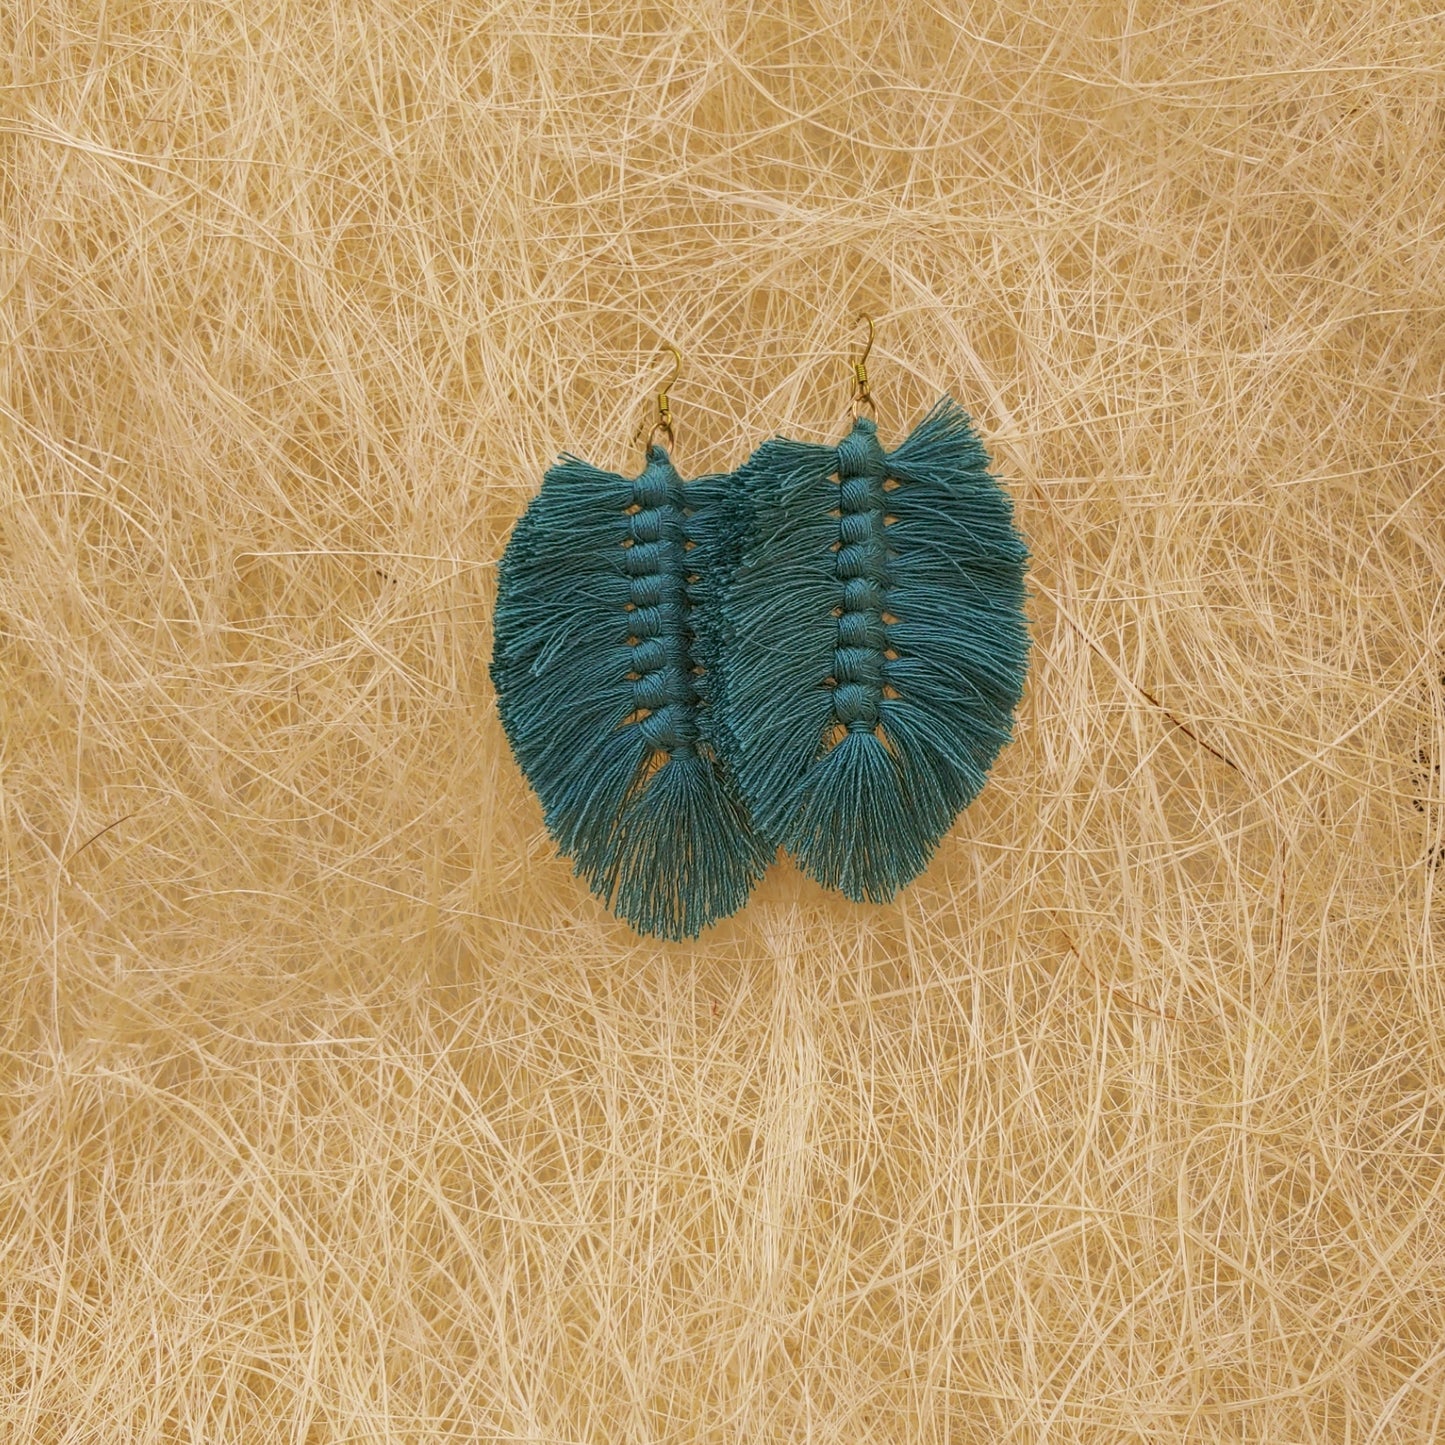 Fringed Leaf Earrings Iyada 202011